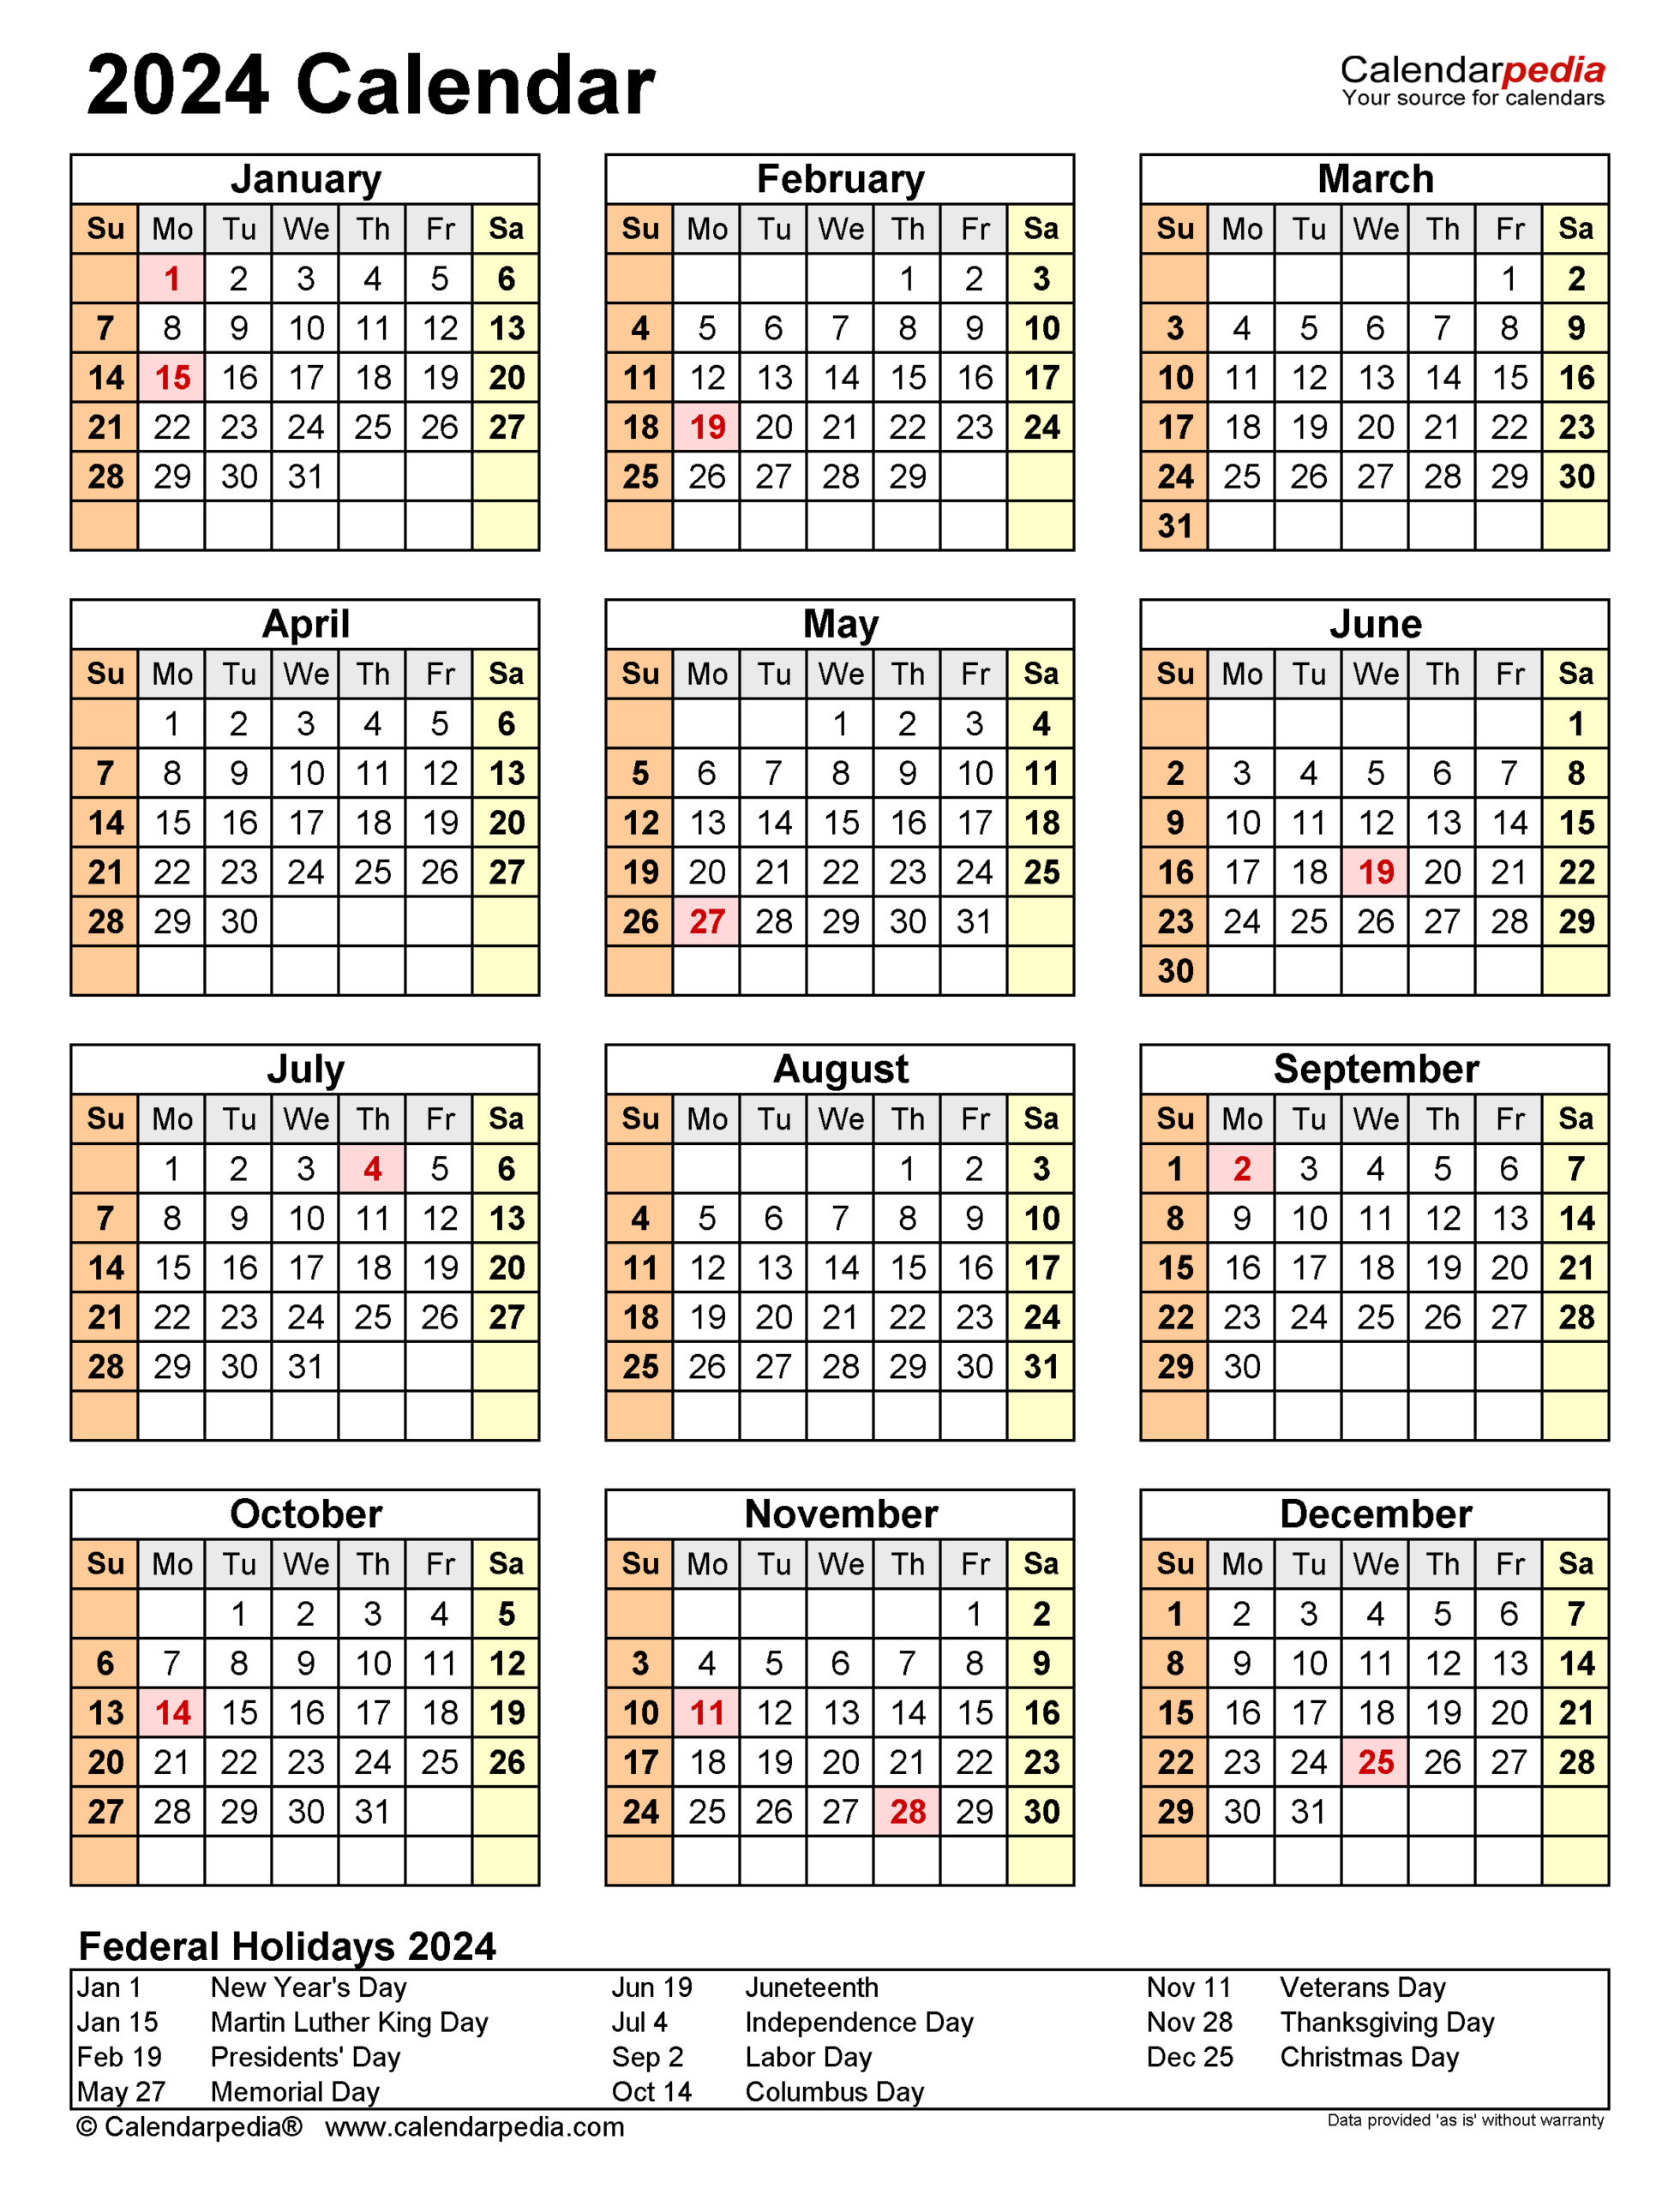 2024 Calendar - Free Printable Excel Templates - Calendarpedia | 2024 Printable Calendar With Holidays India